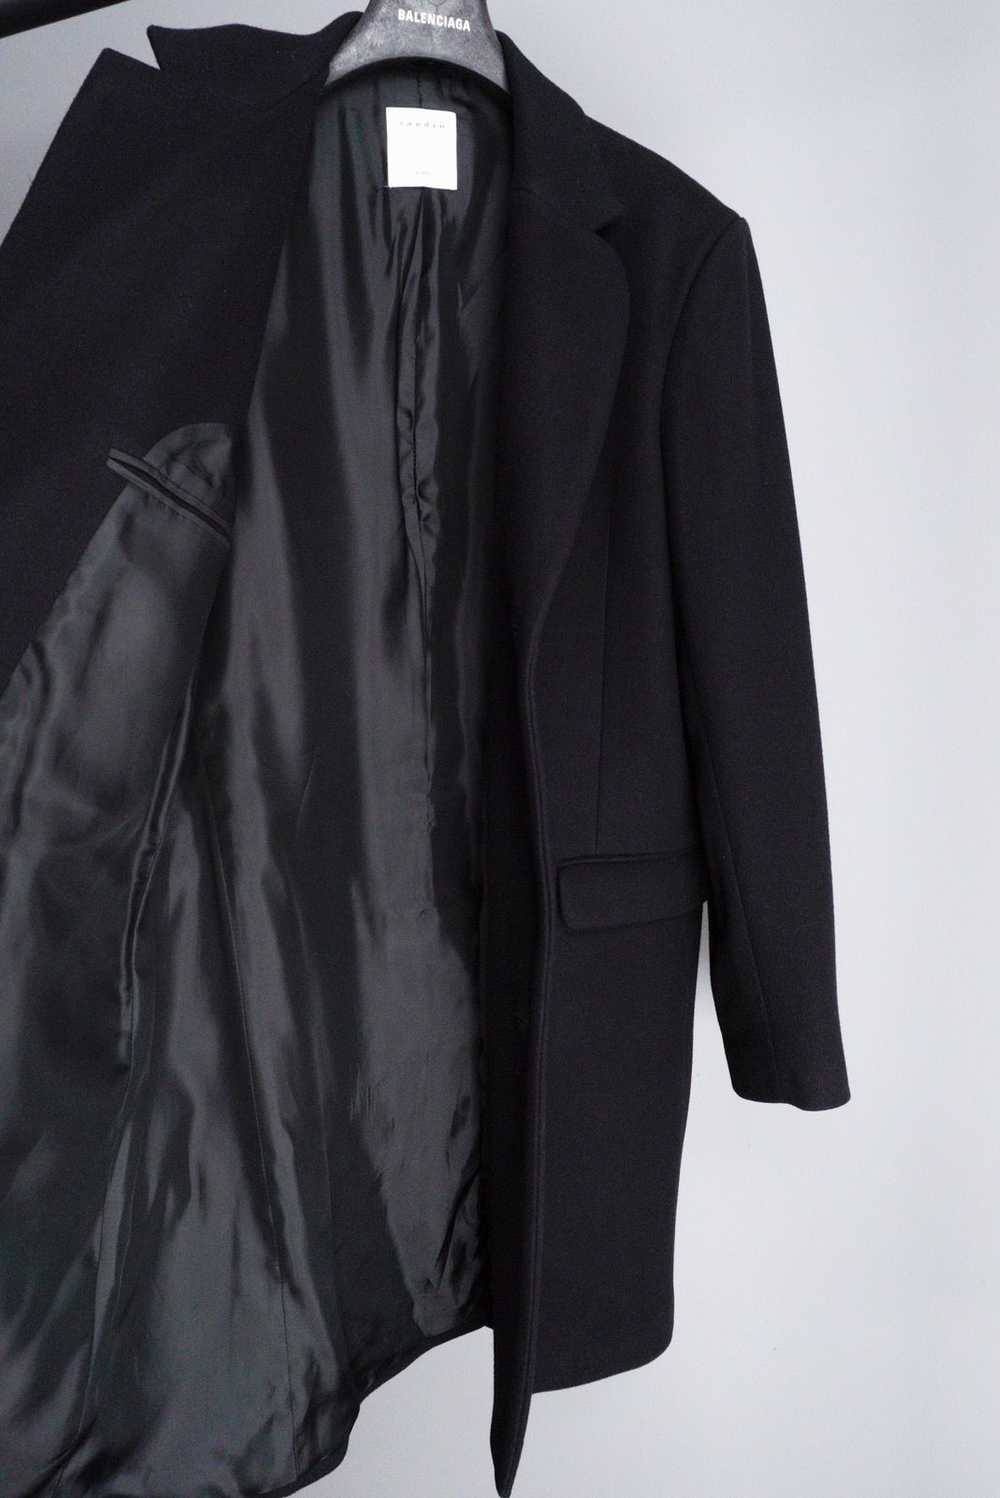 Sandro Sandro paris classic black wool coat jacket - image 8